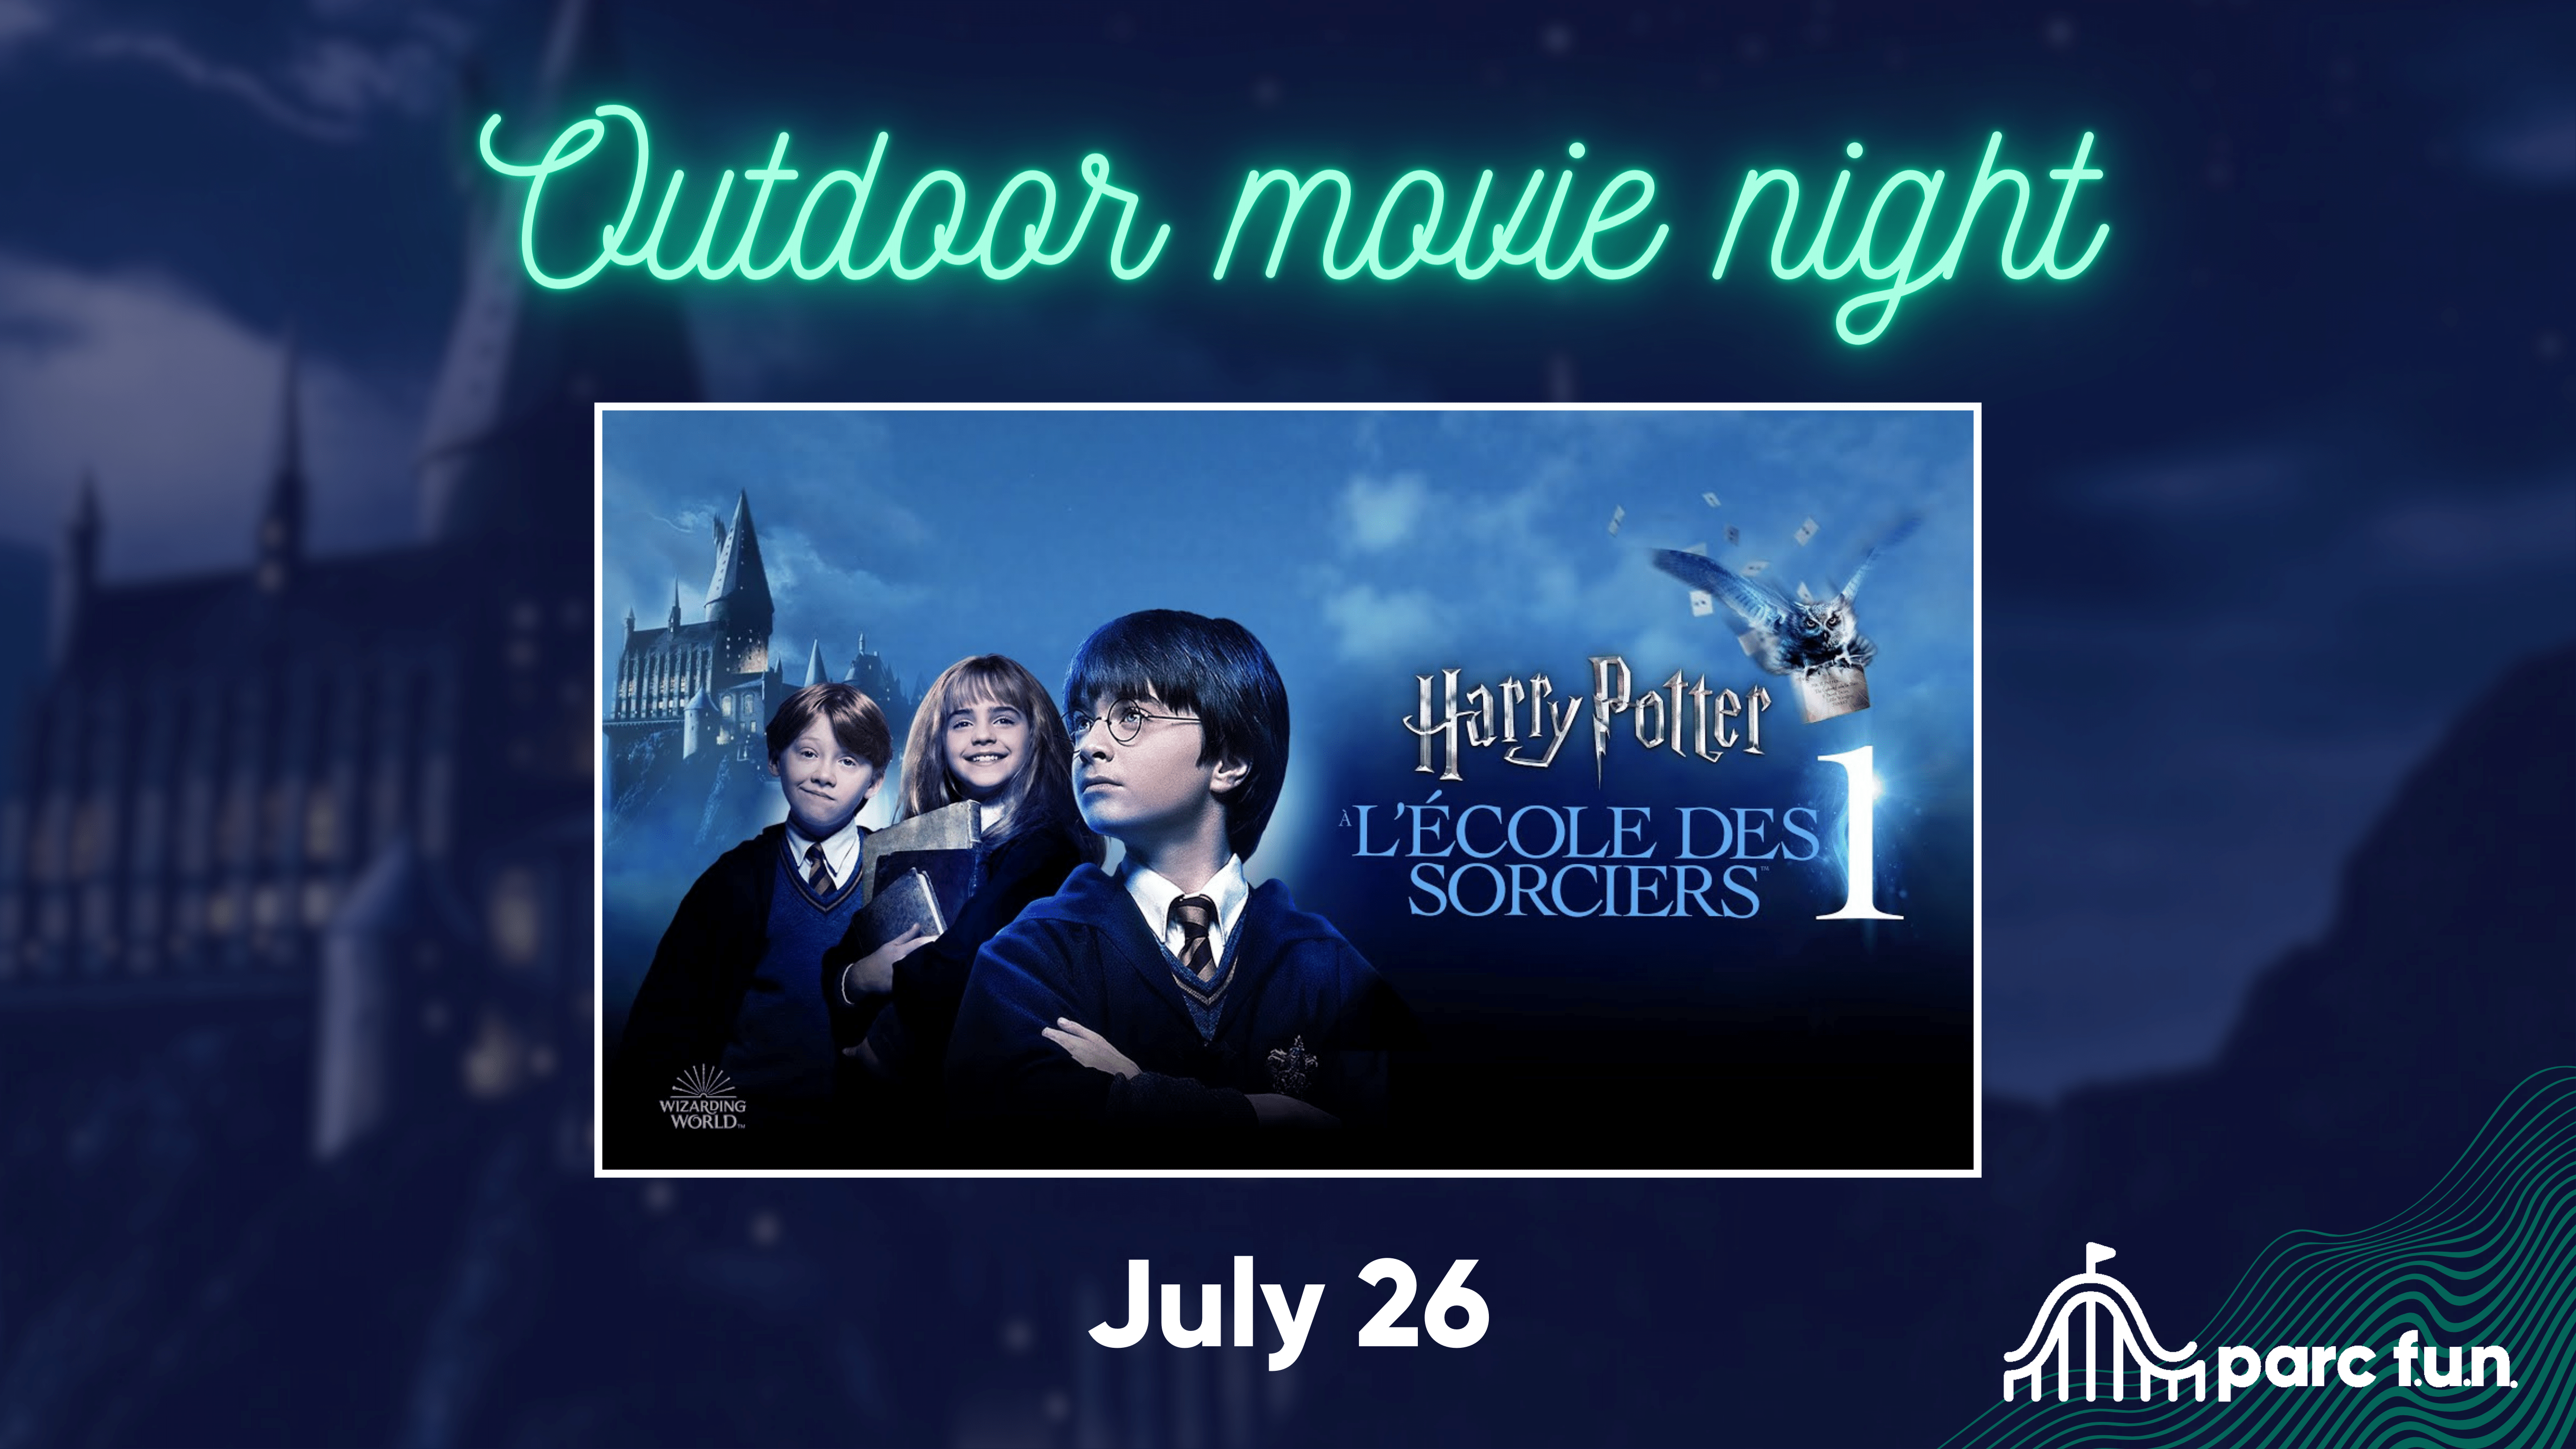 Outdoor movie night: Harry Potter